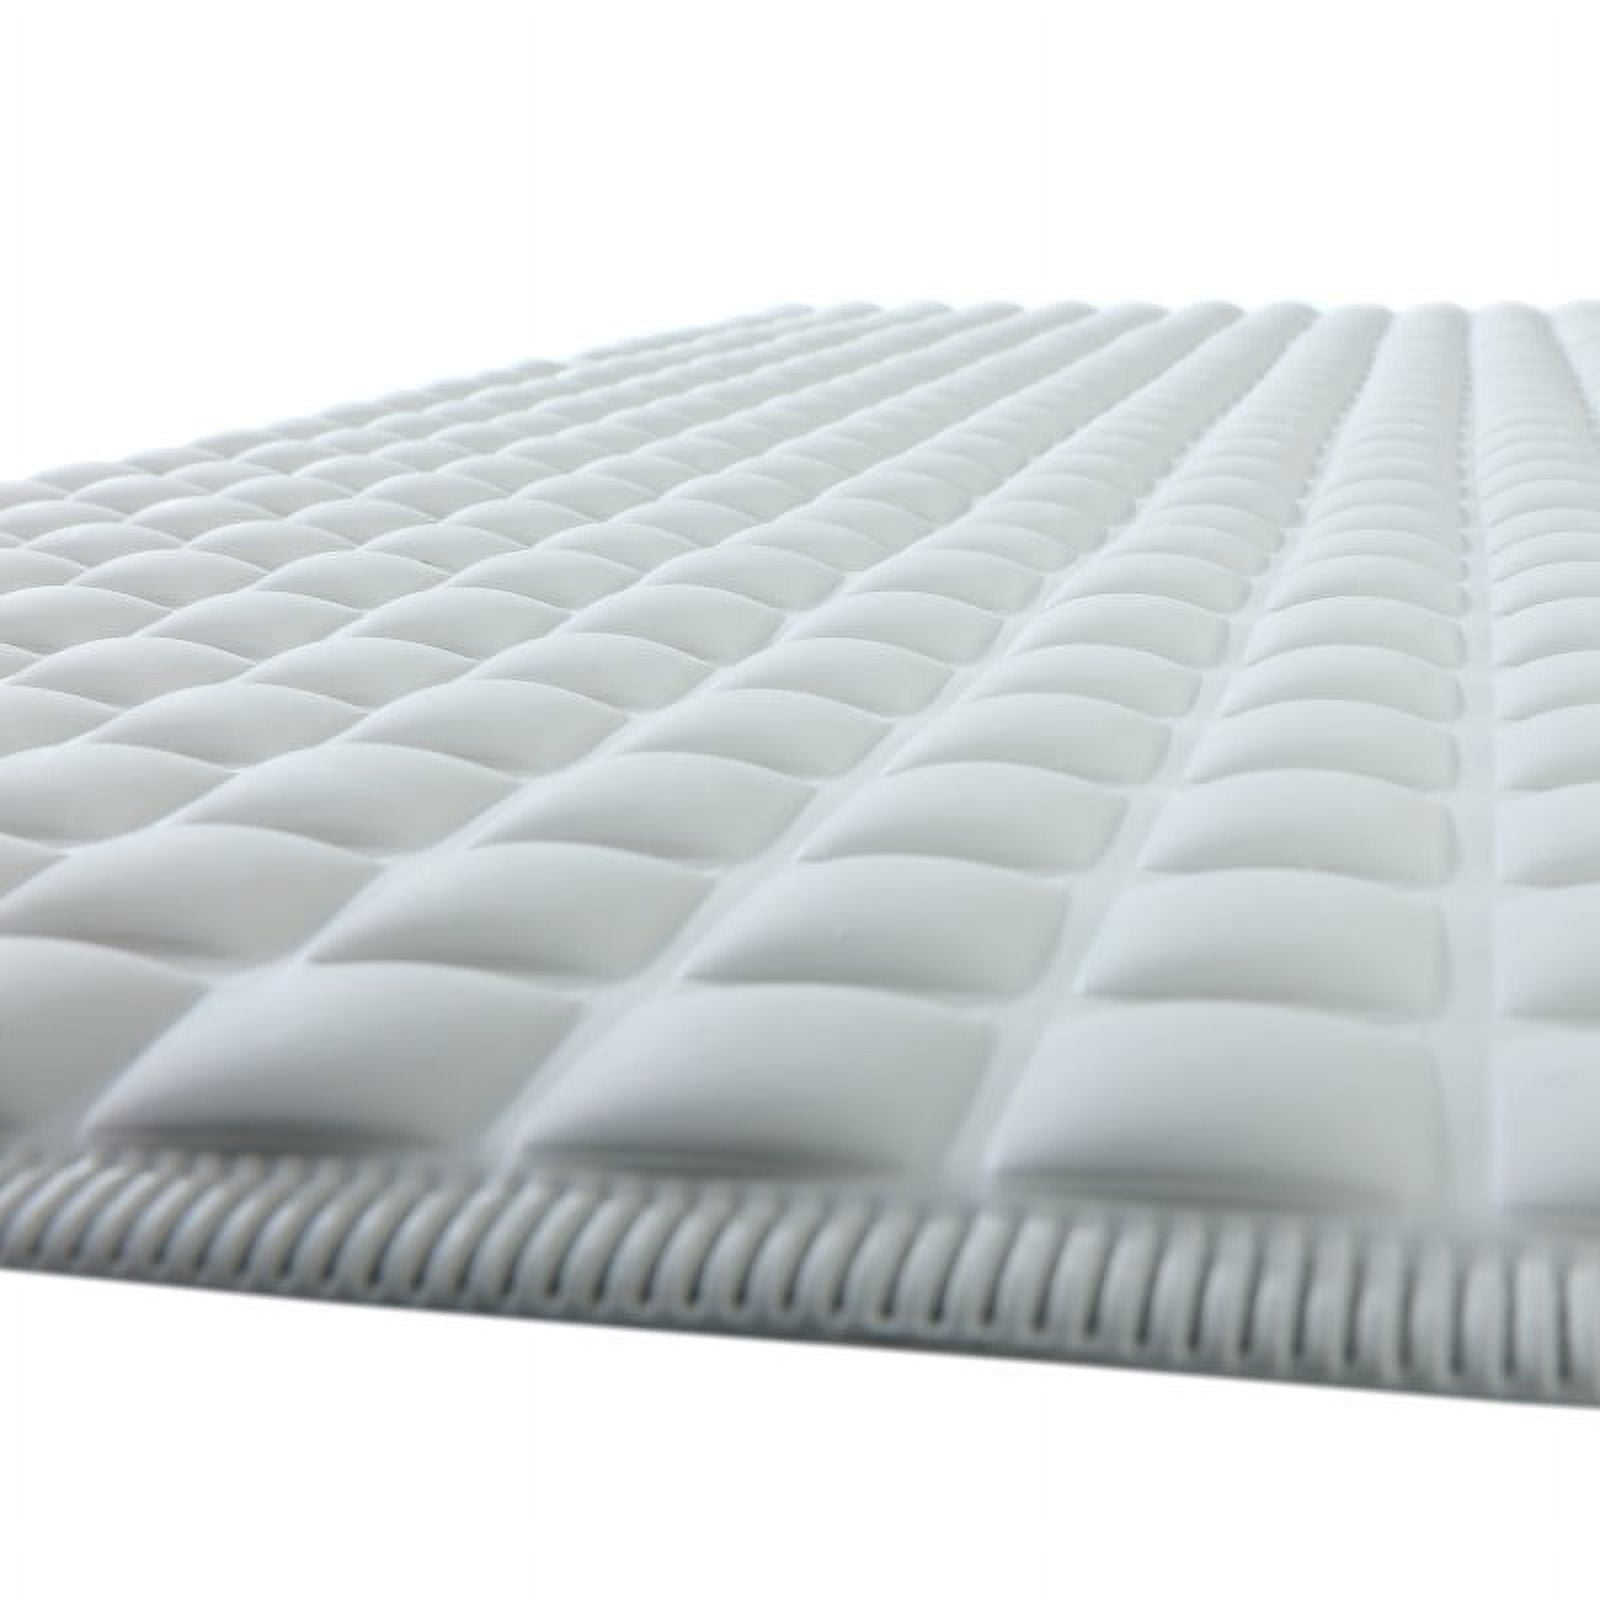 Cushioned Pillow Top Non-Slip Rubber Bathtub Mat - Slipx Solutions